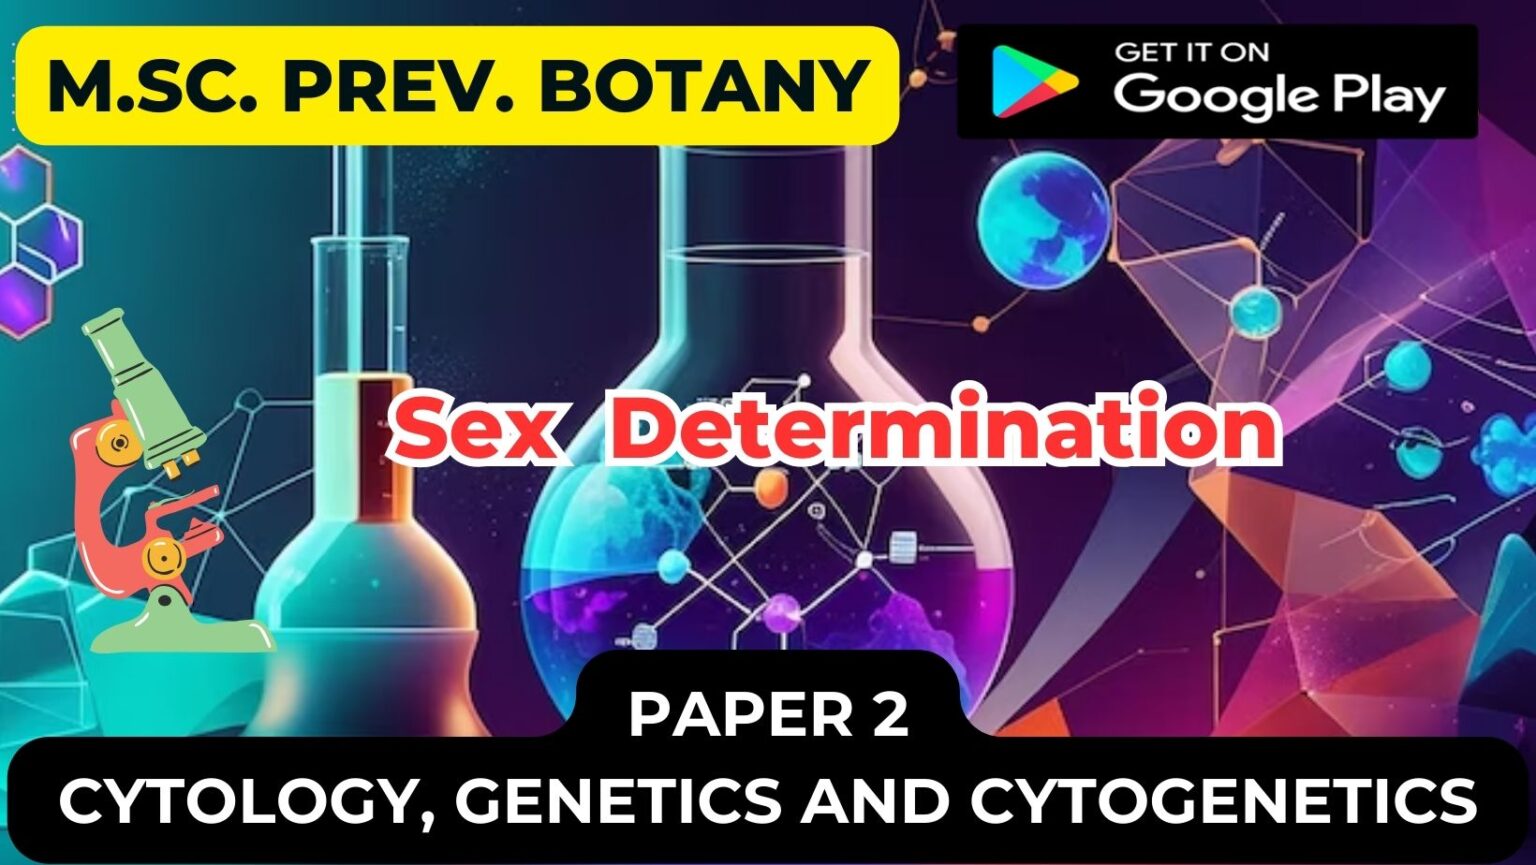 Sex Determination